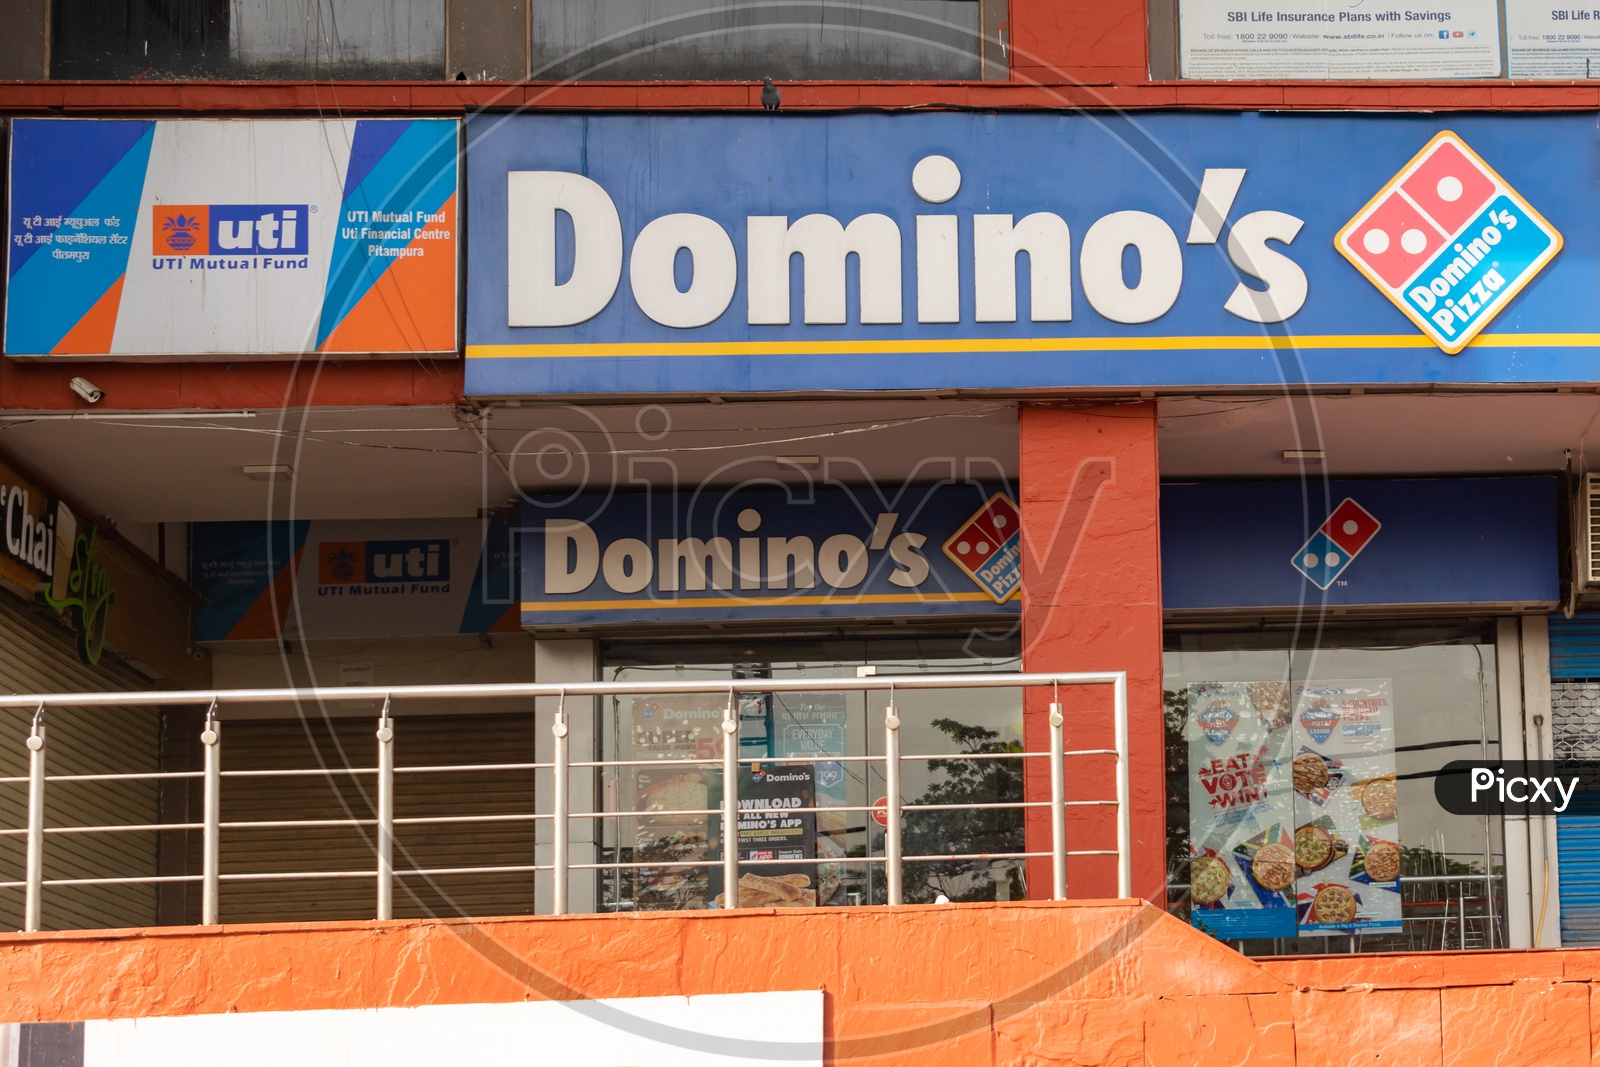 Domino's Pizza Outlet at Netaji Subhash Place, Pitampura, Delhi